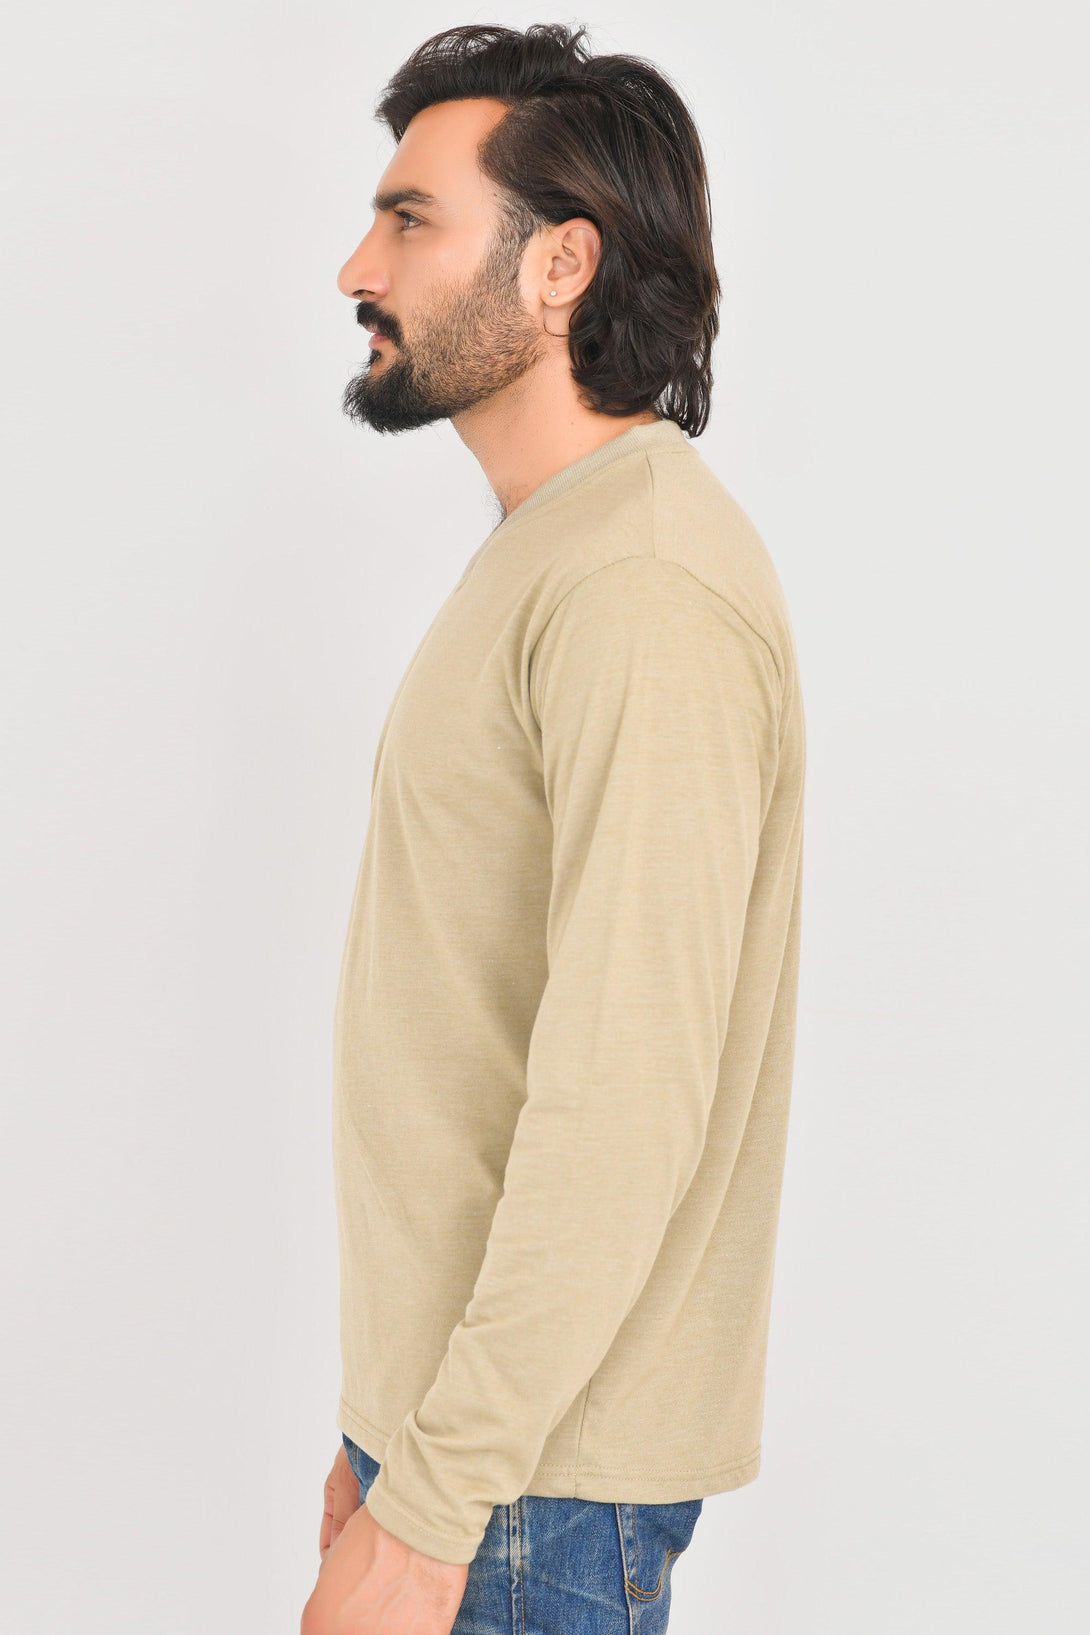 V-Neck Long Sleeve T-Shirts | LAGOON-STONE-HUNTER GREEN-NAVY MELANGE - Pack of 4 - FTS